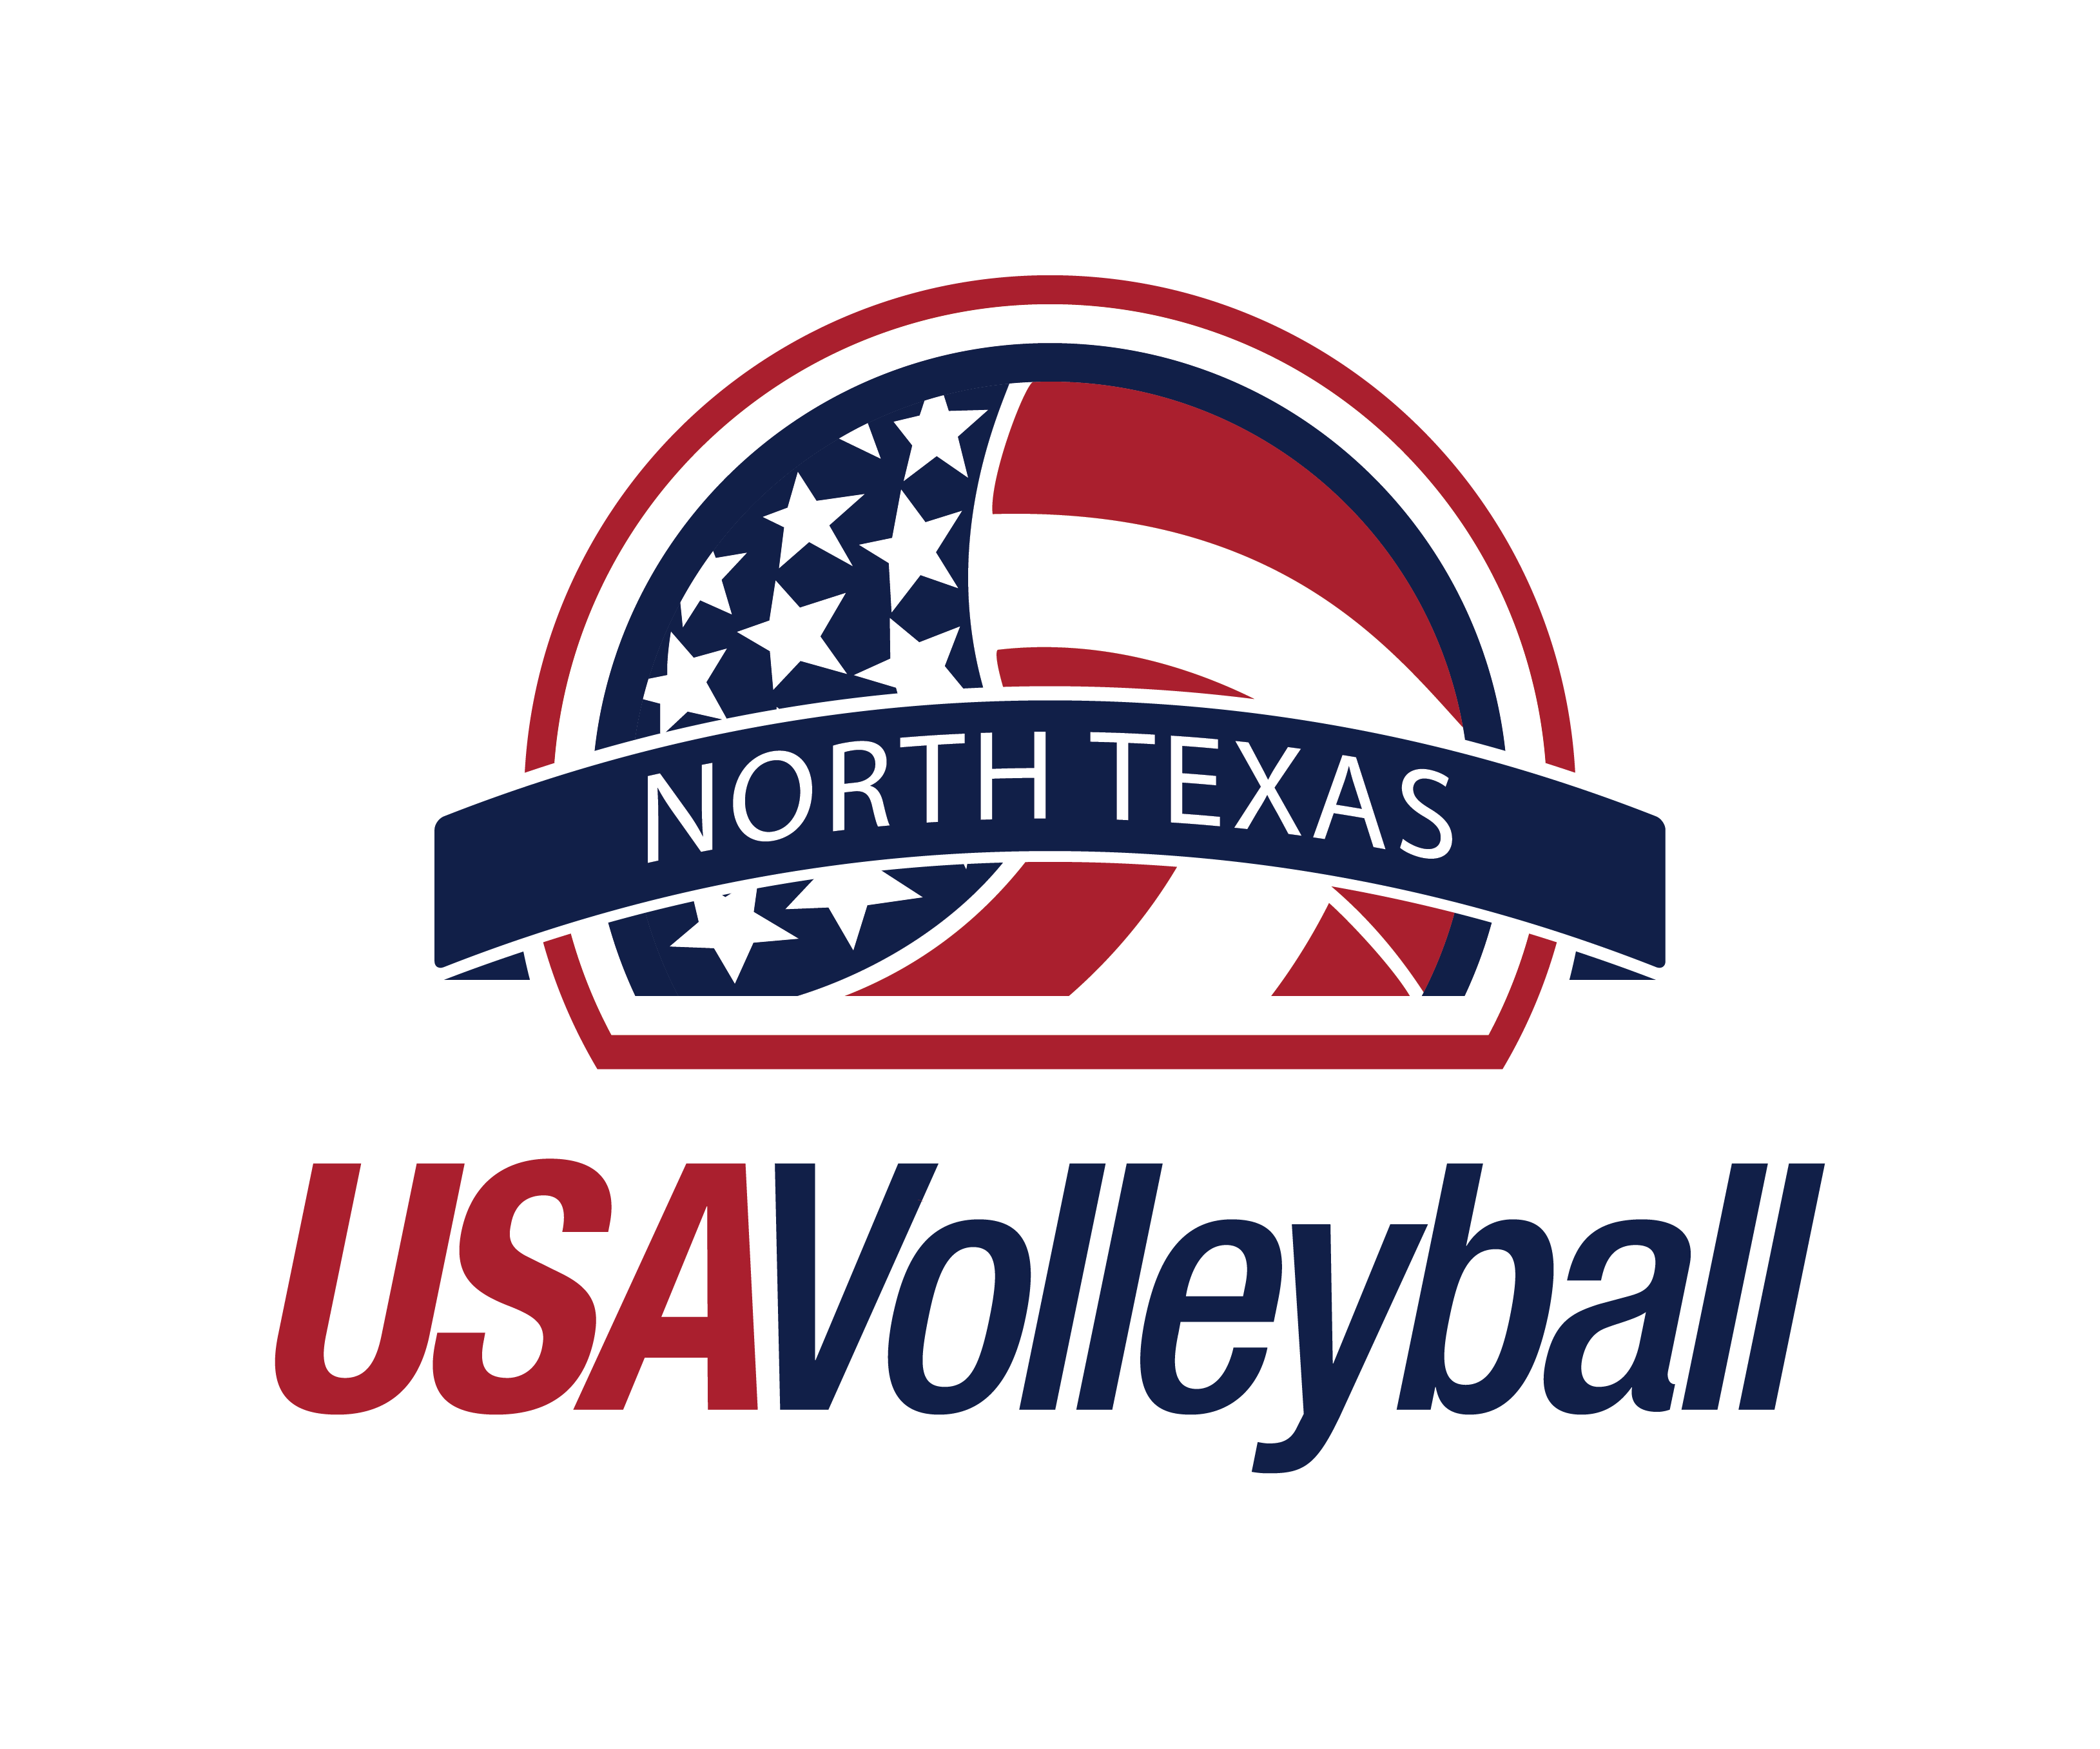 North Texas Region logo